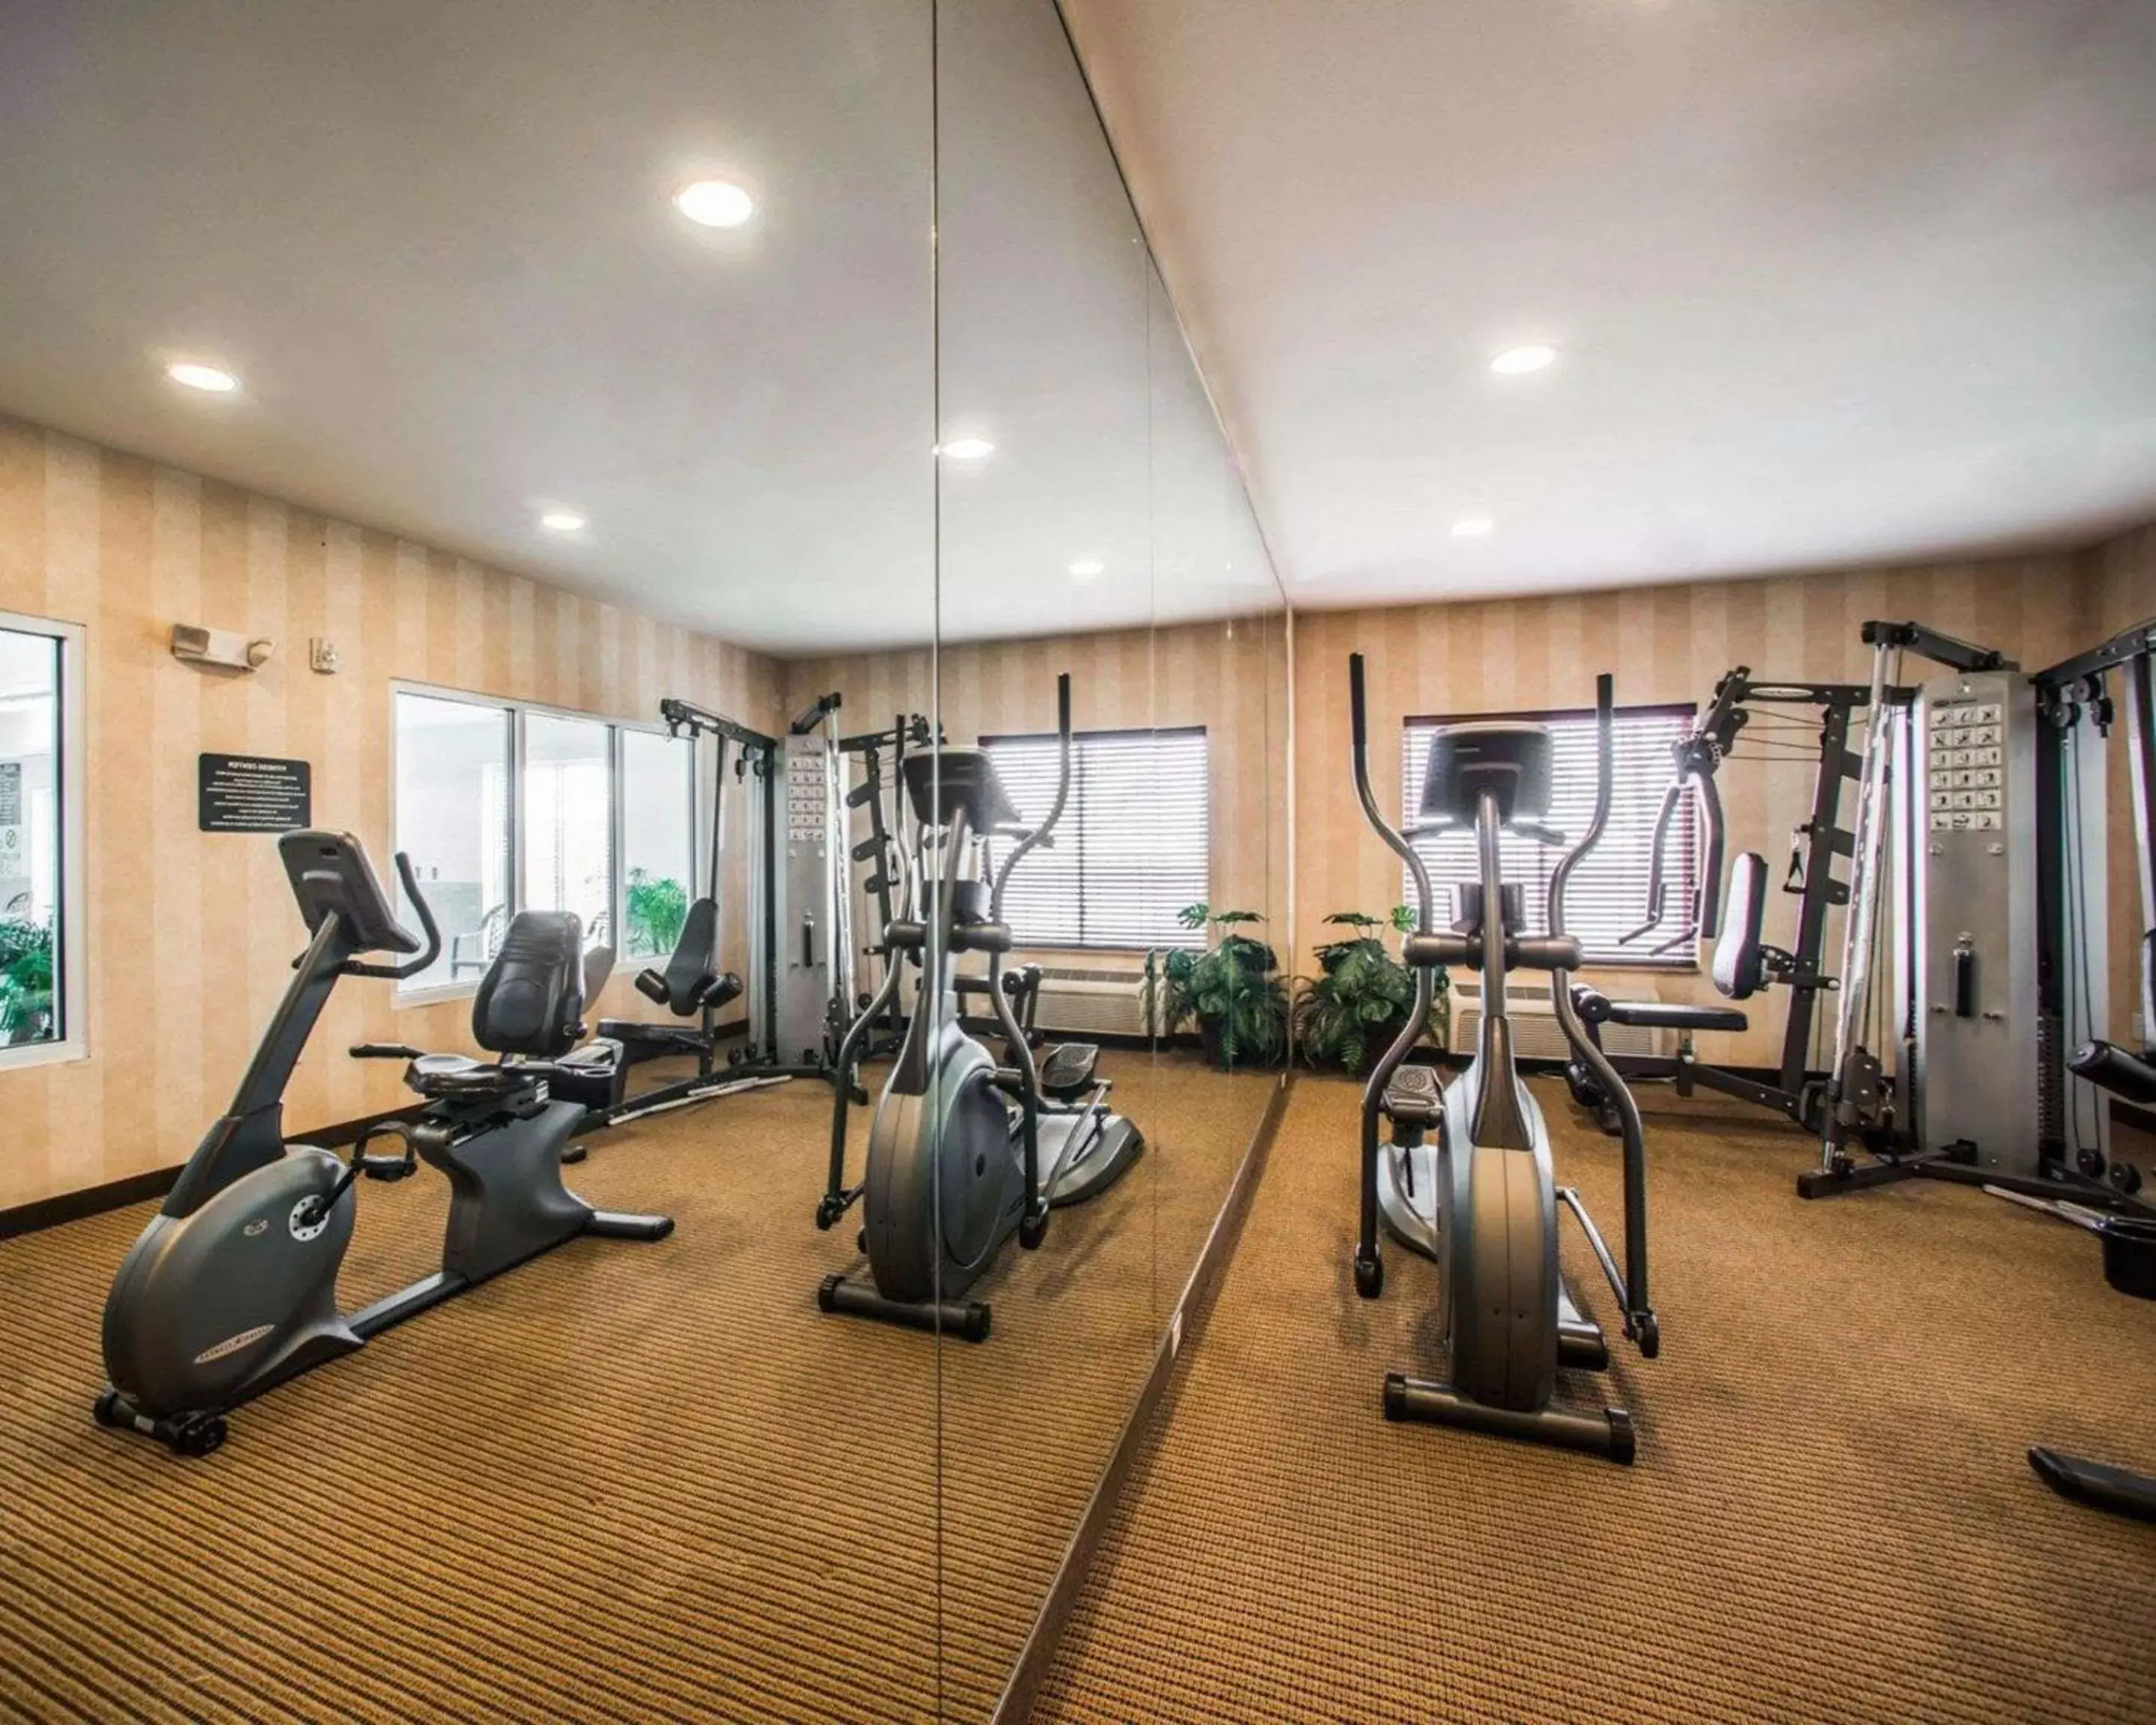 Fitness centre/facilities, Fitness Center/Facilities in Sleep Inn & Suites Washington near Peoria